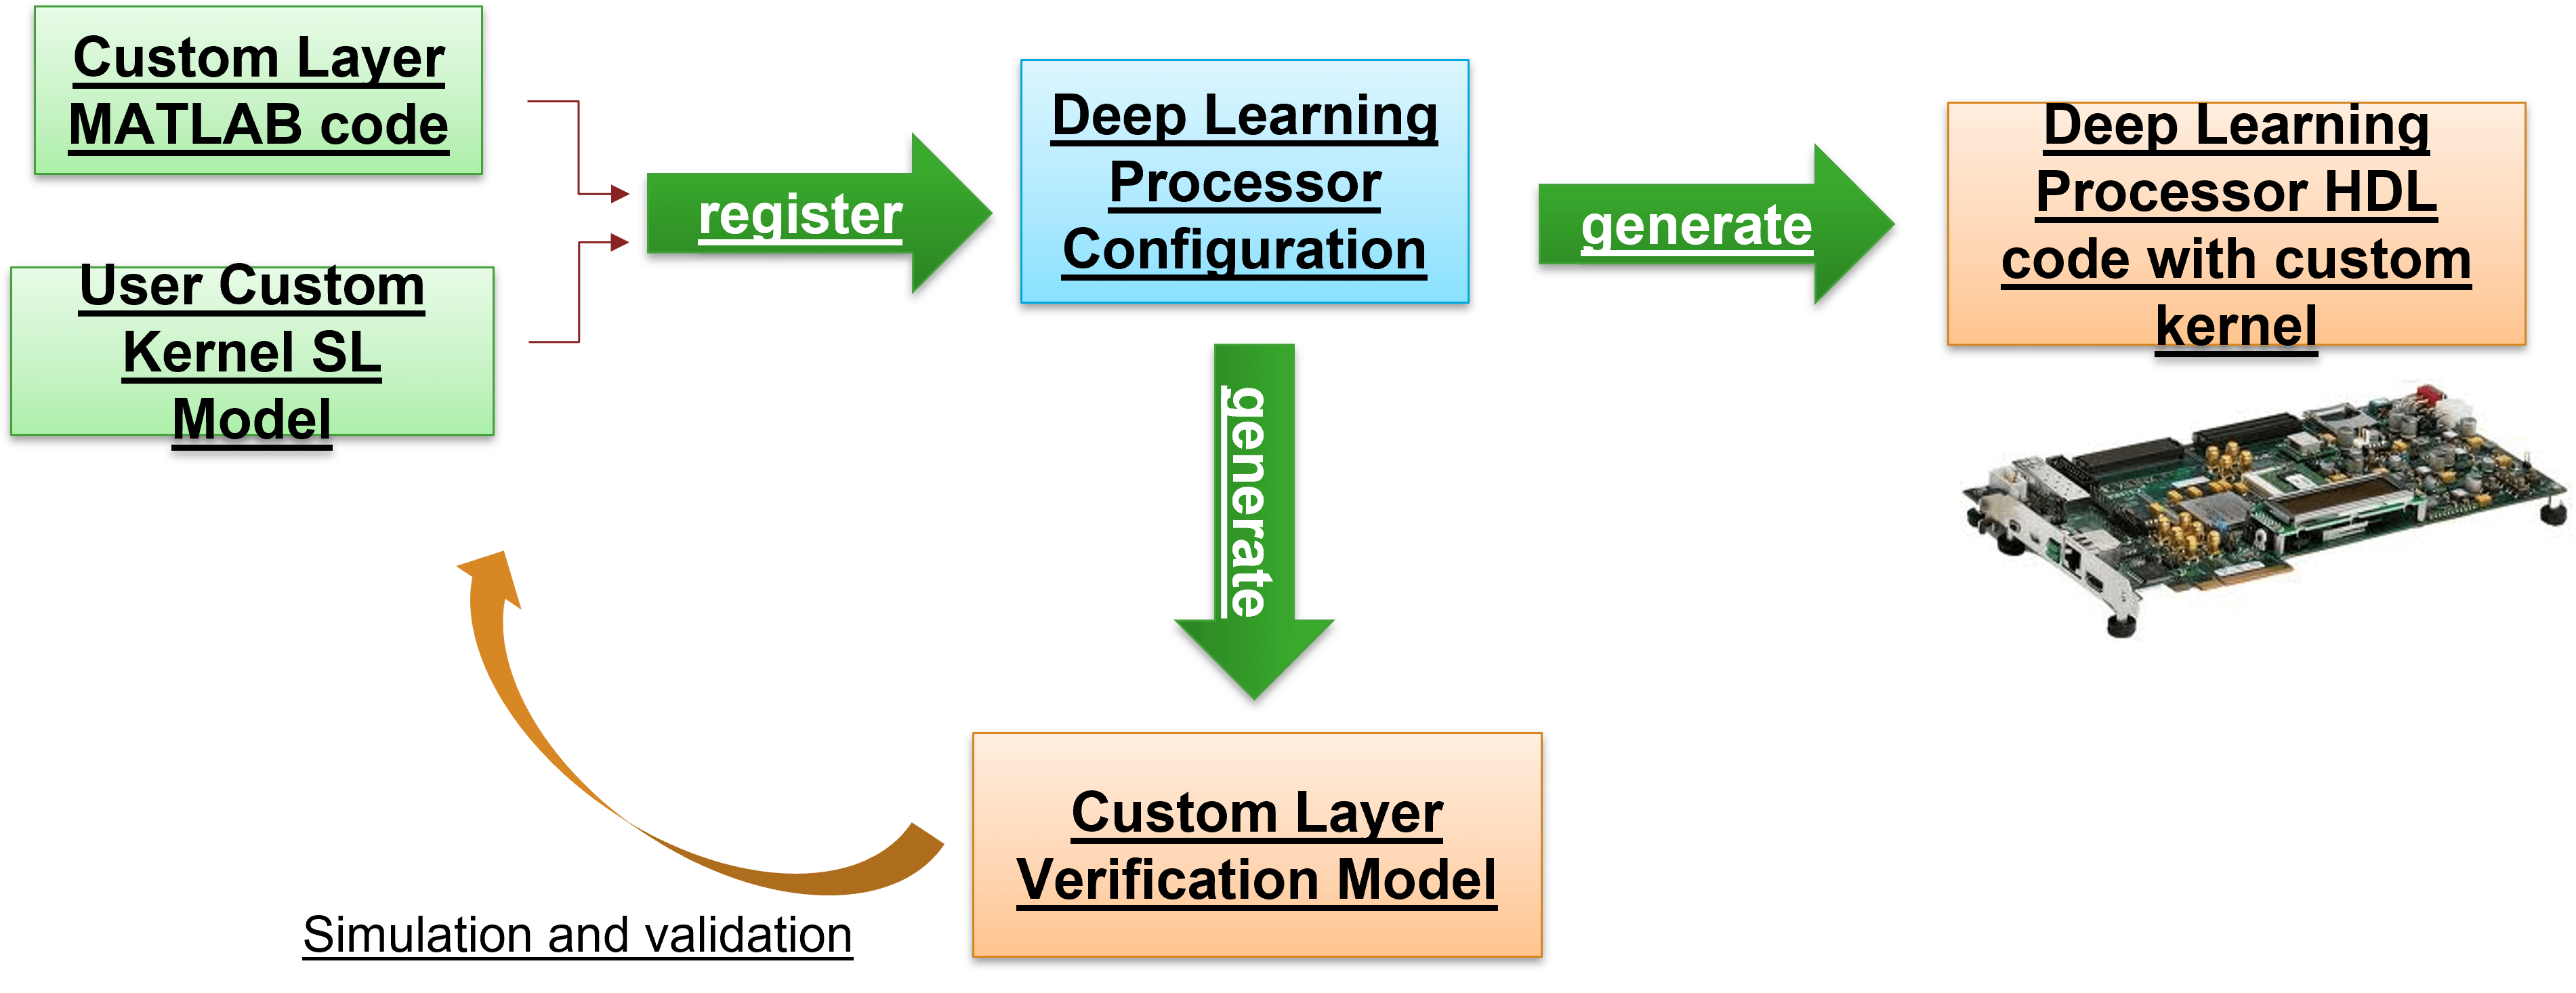 Custom layer kernel development process